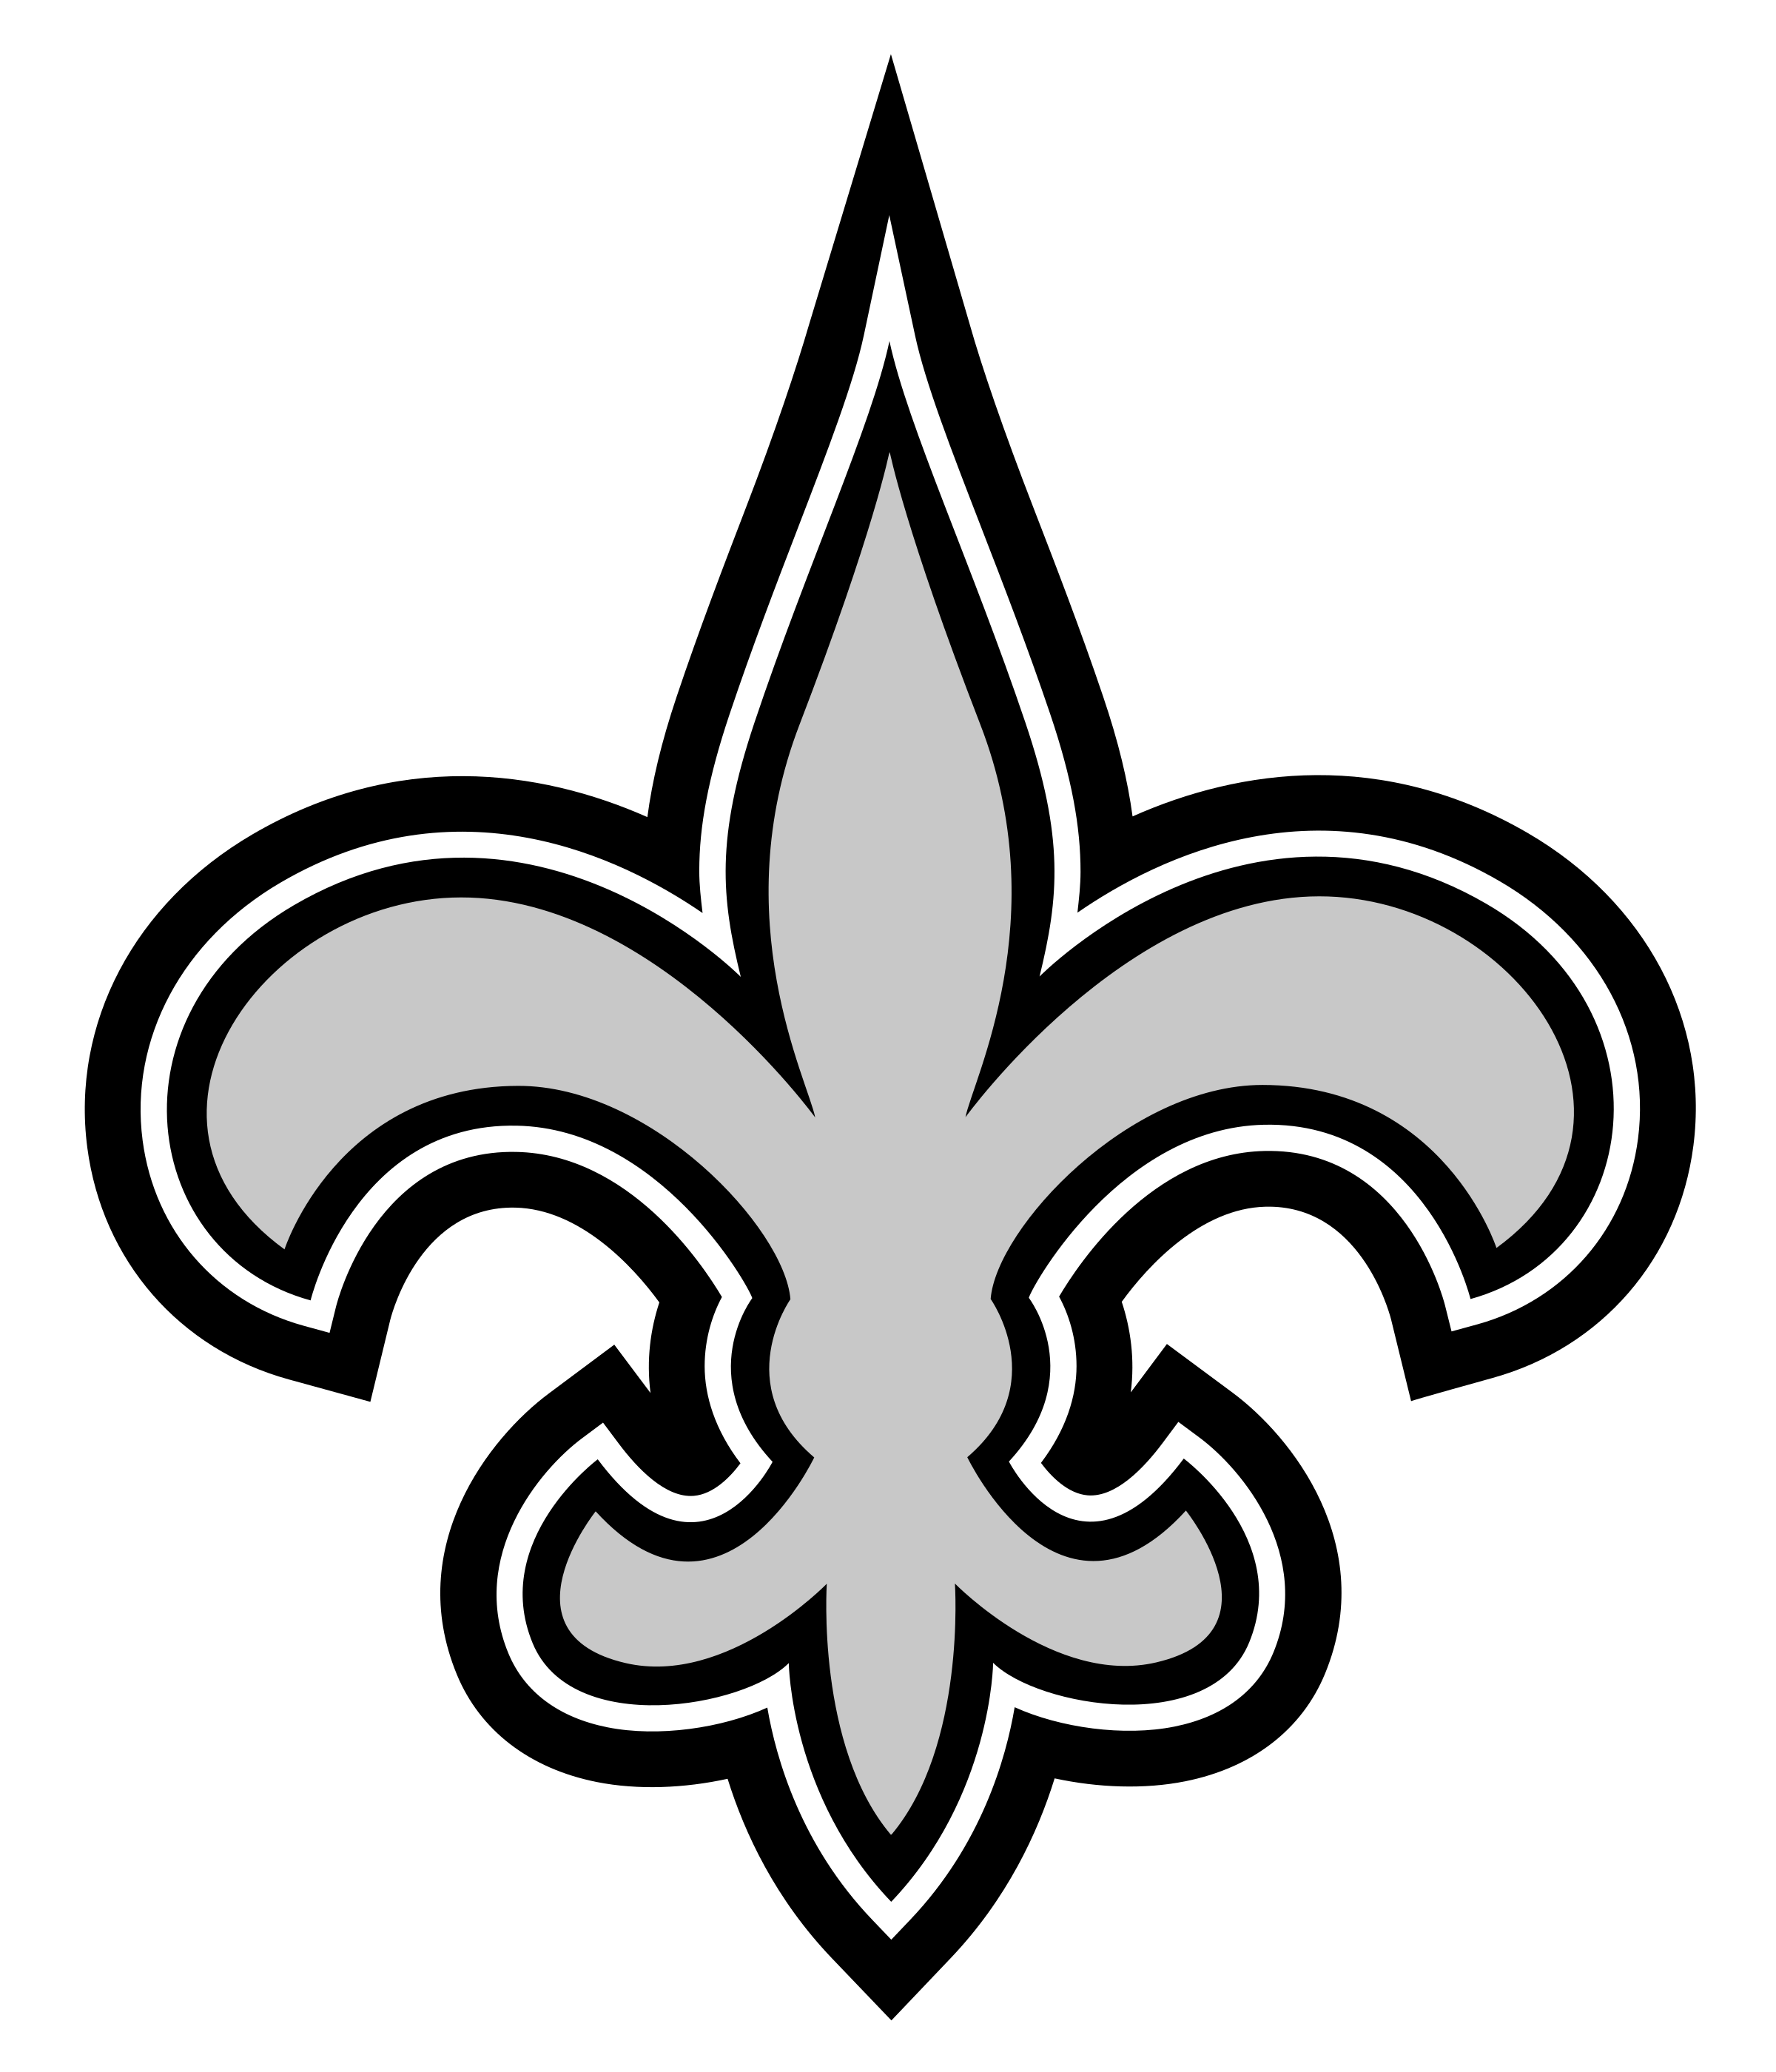 Black and White Saints Logo - New Orleans Saints Logo PNG Transparent & SVG Vector - Freebie Supply